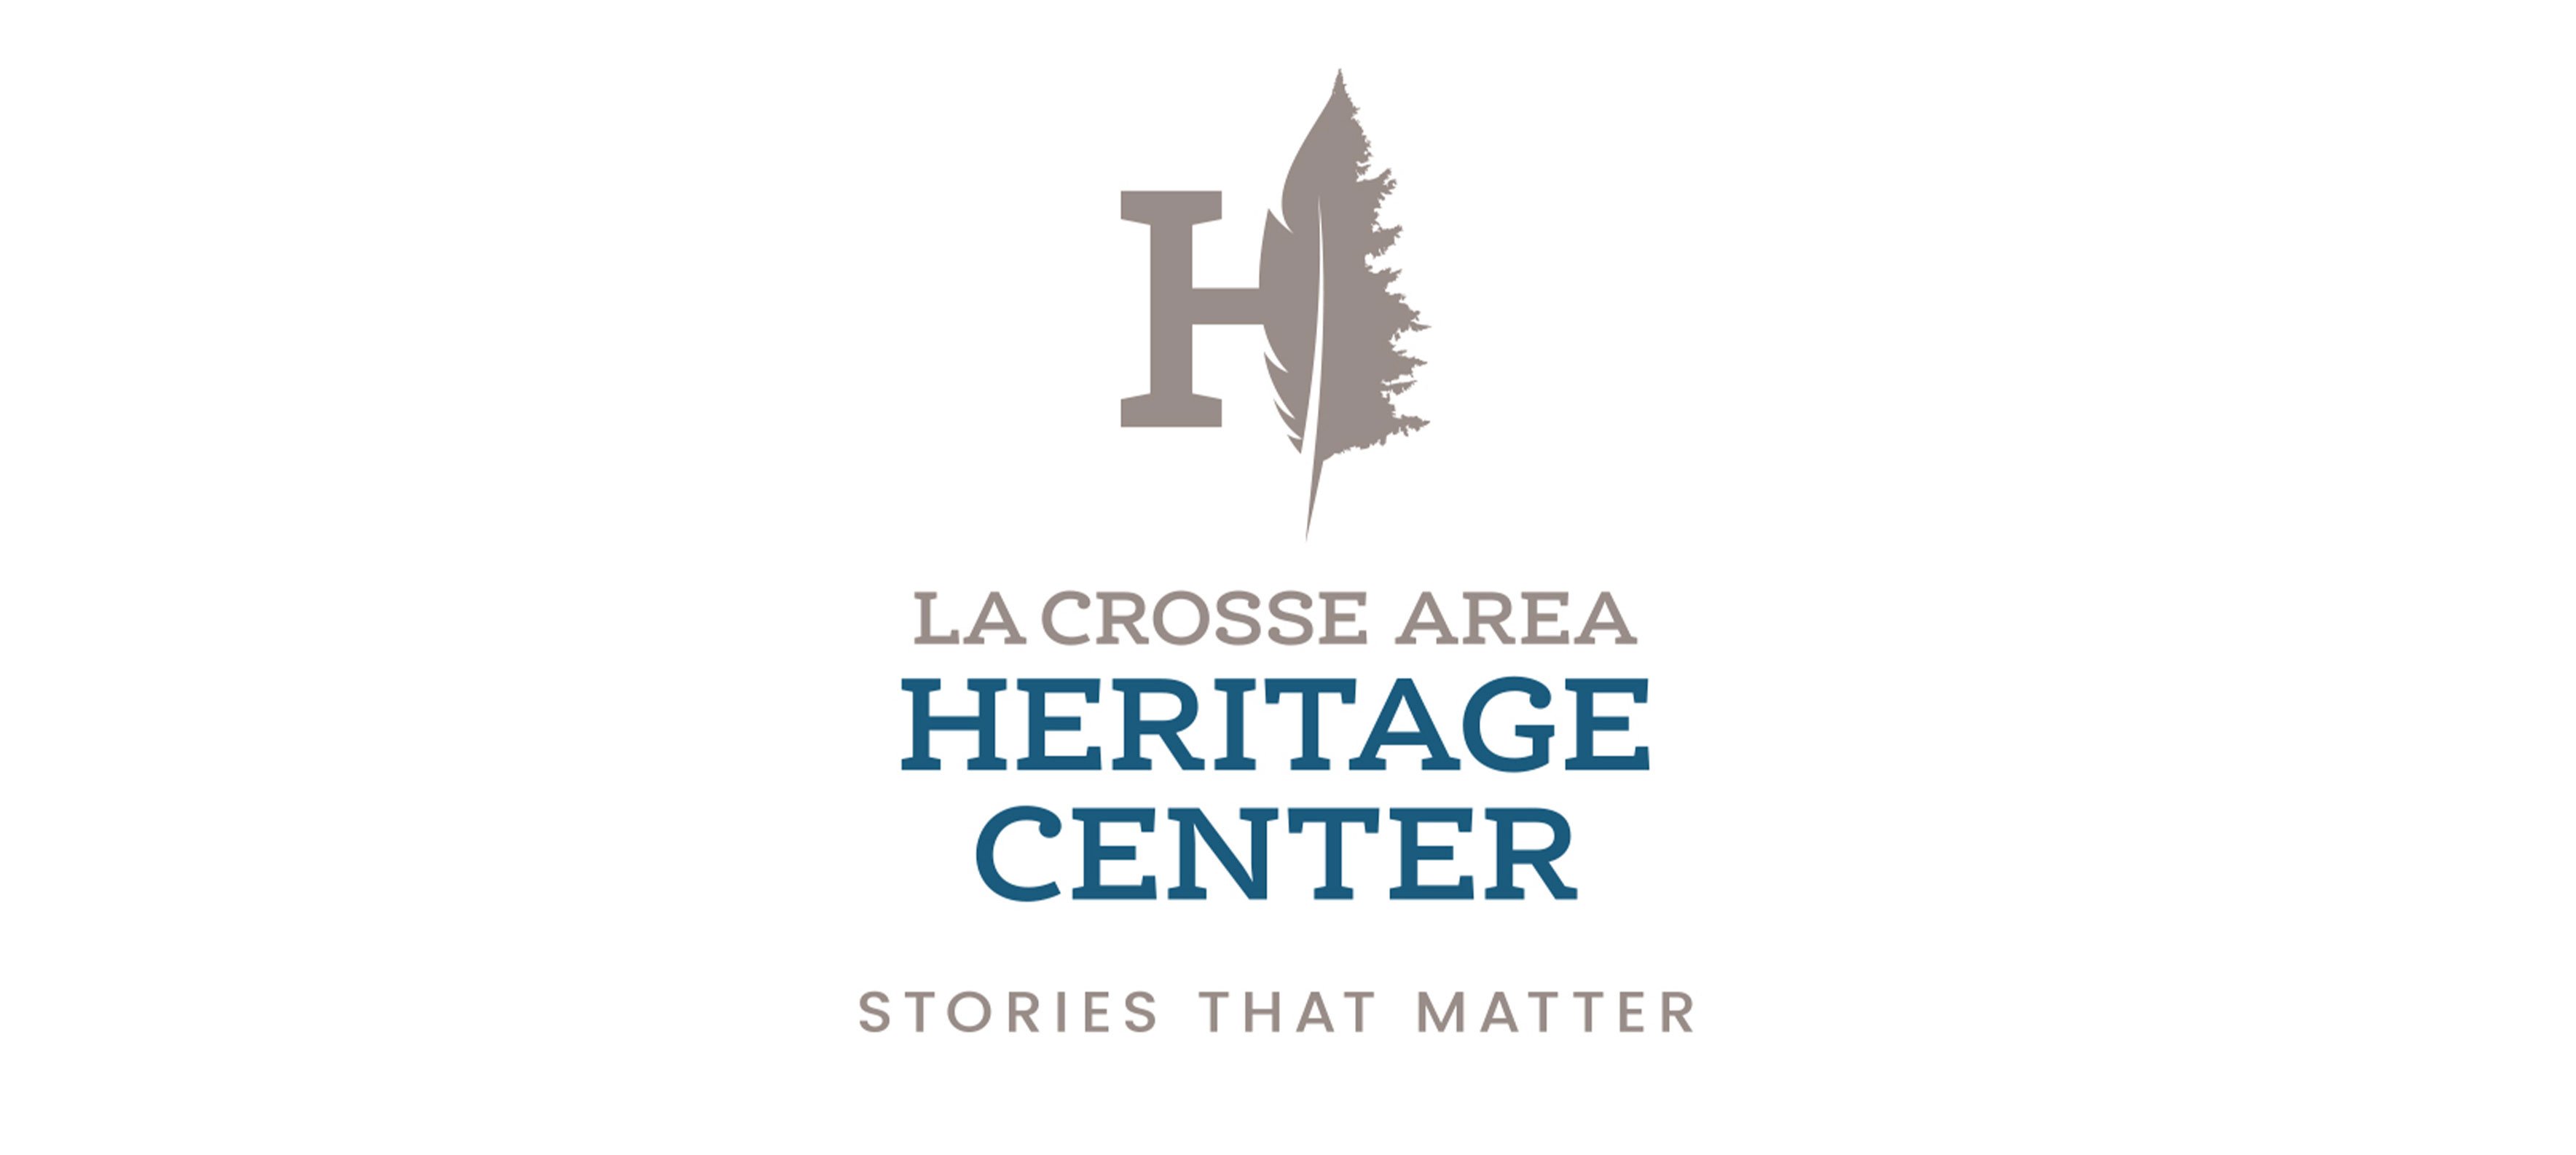 La Crosse Area Heritage Center logo, created by Vendi Advertising